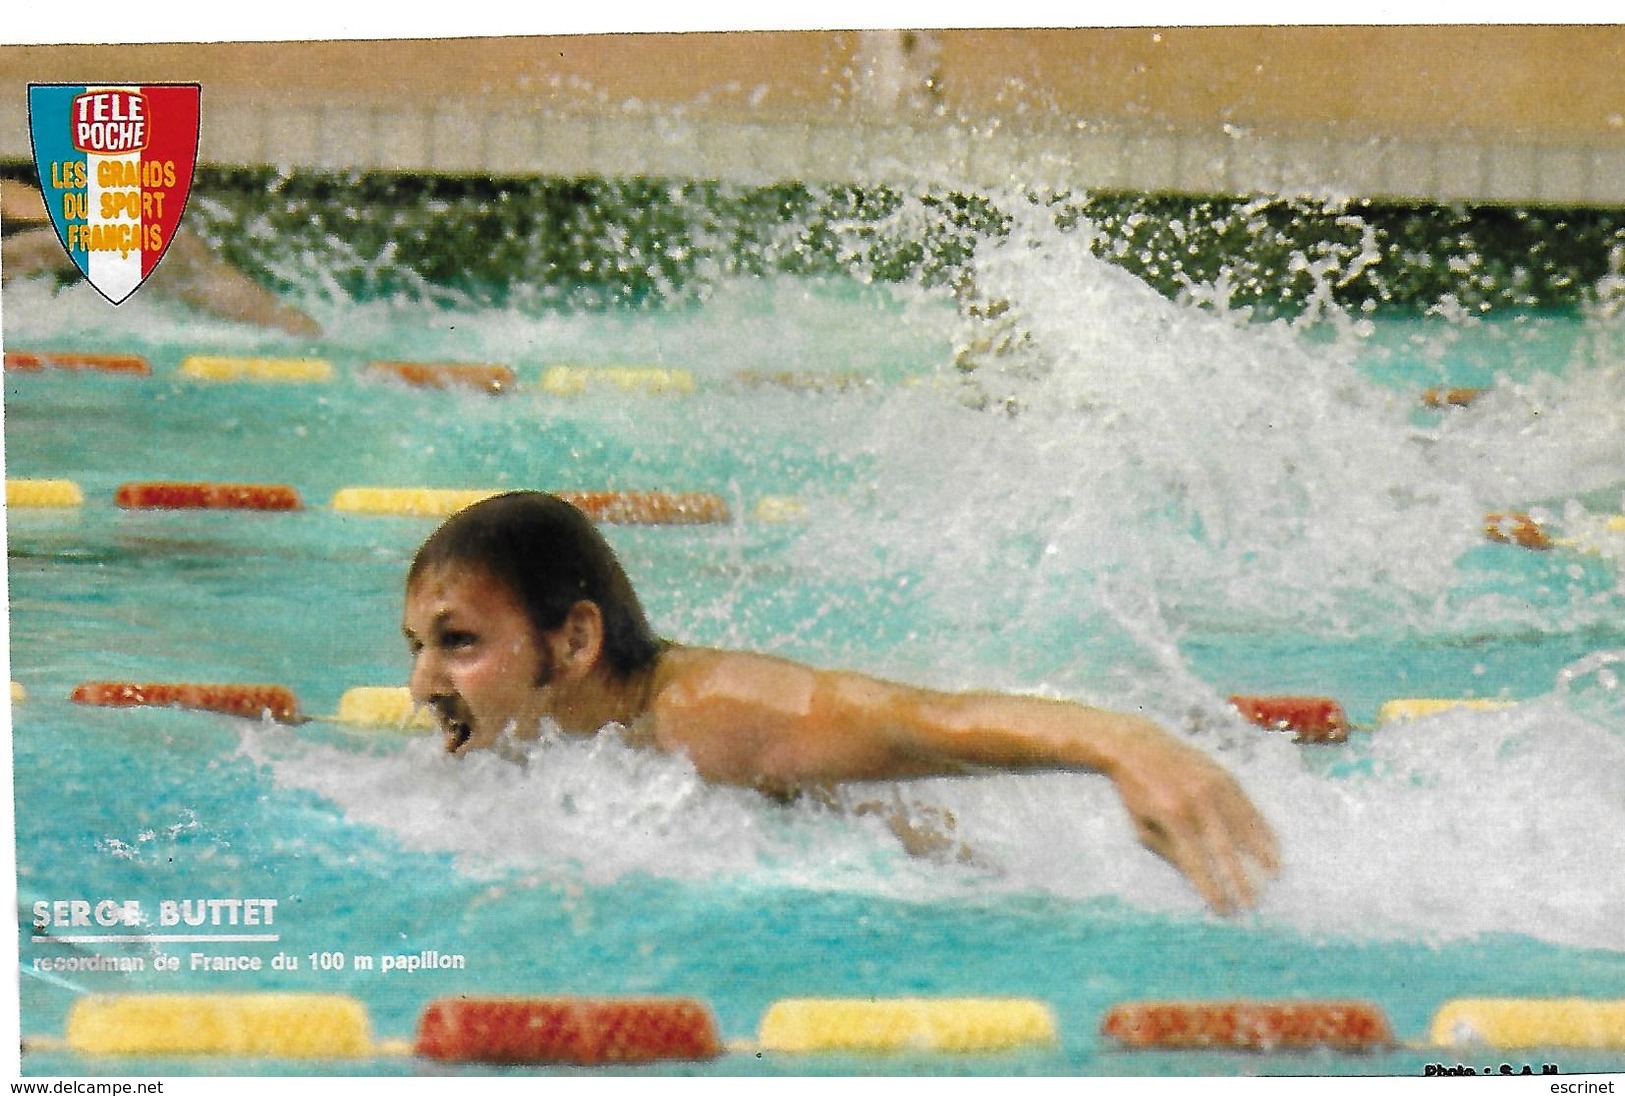 BUTTET Serge - Swimming